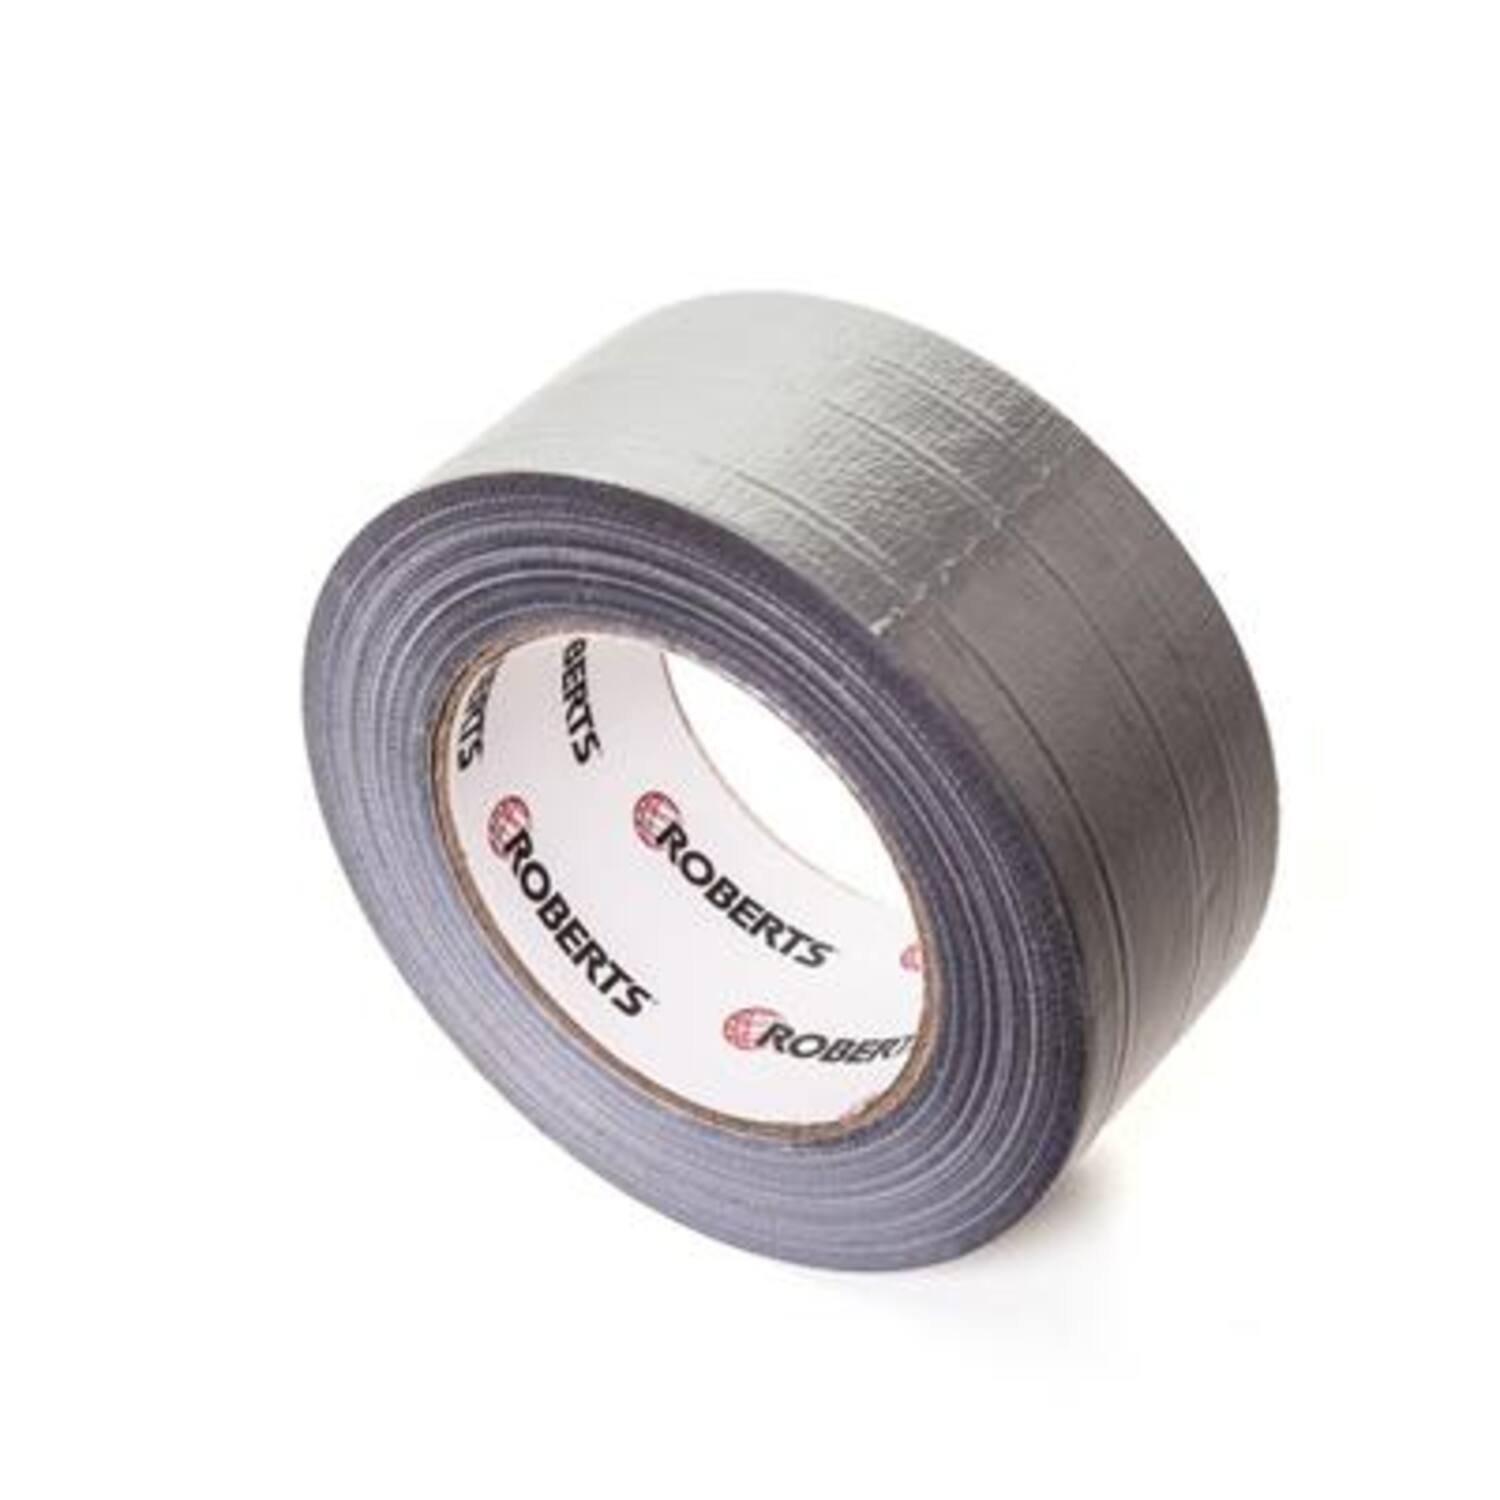 TAPITON Duct tape 50mm x 50 meter